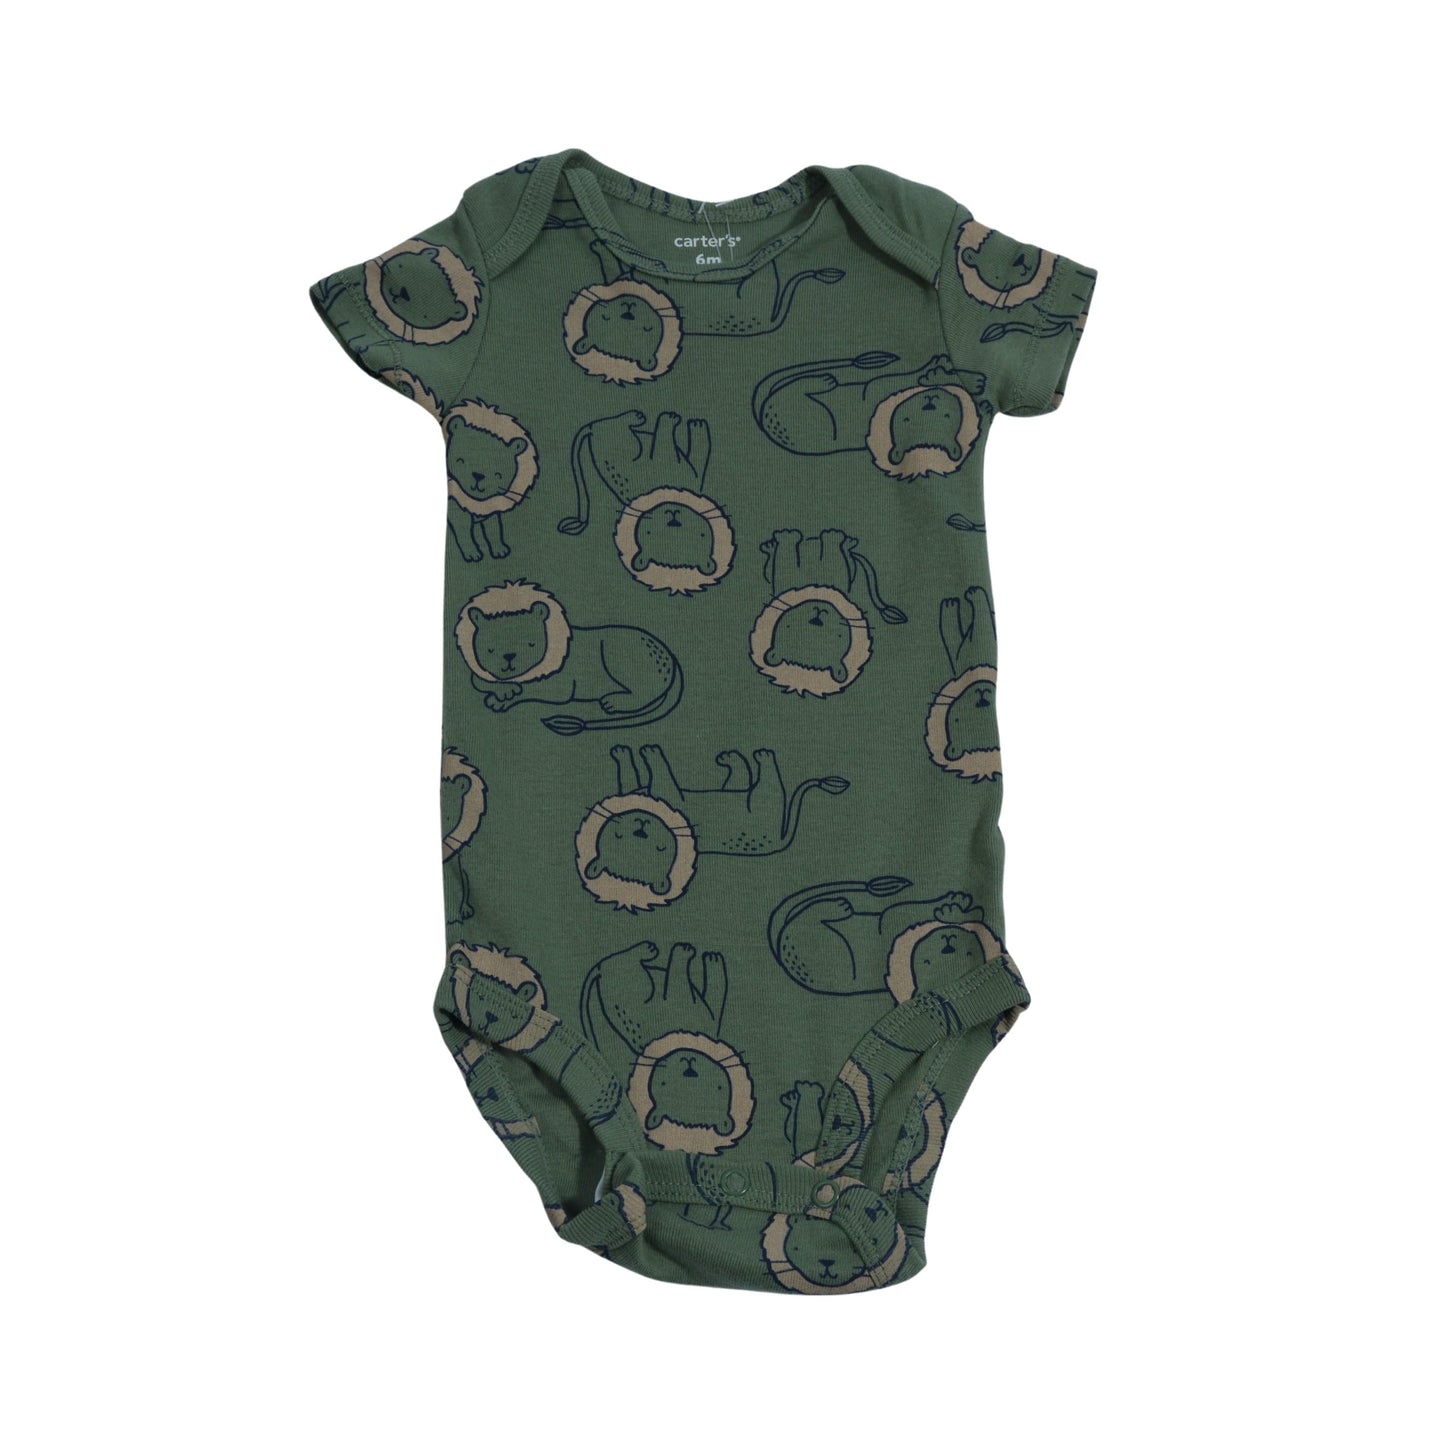 CARTER'S Baby Boy 6 Month / Green CARTER'S - BABY - Printed Bodysuit